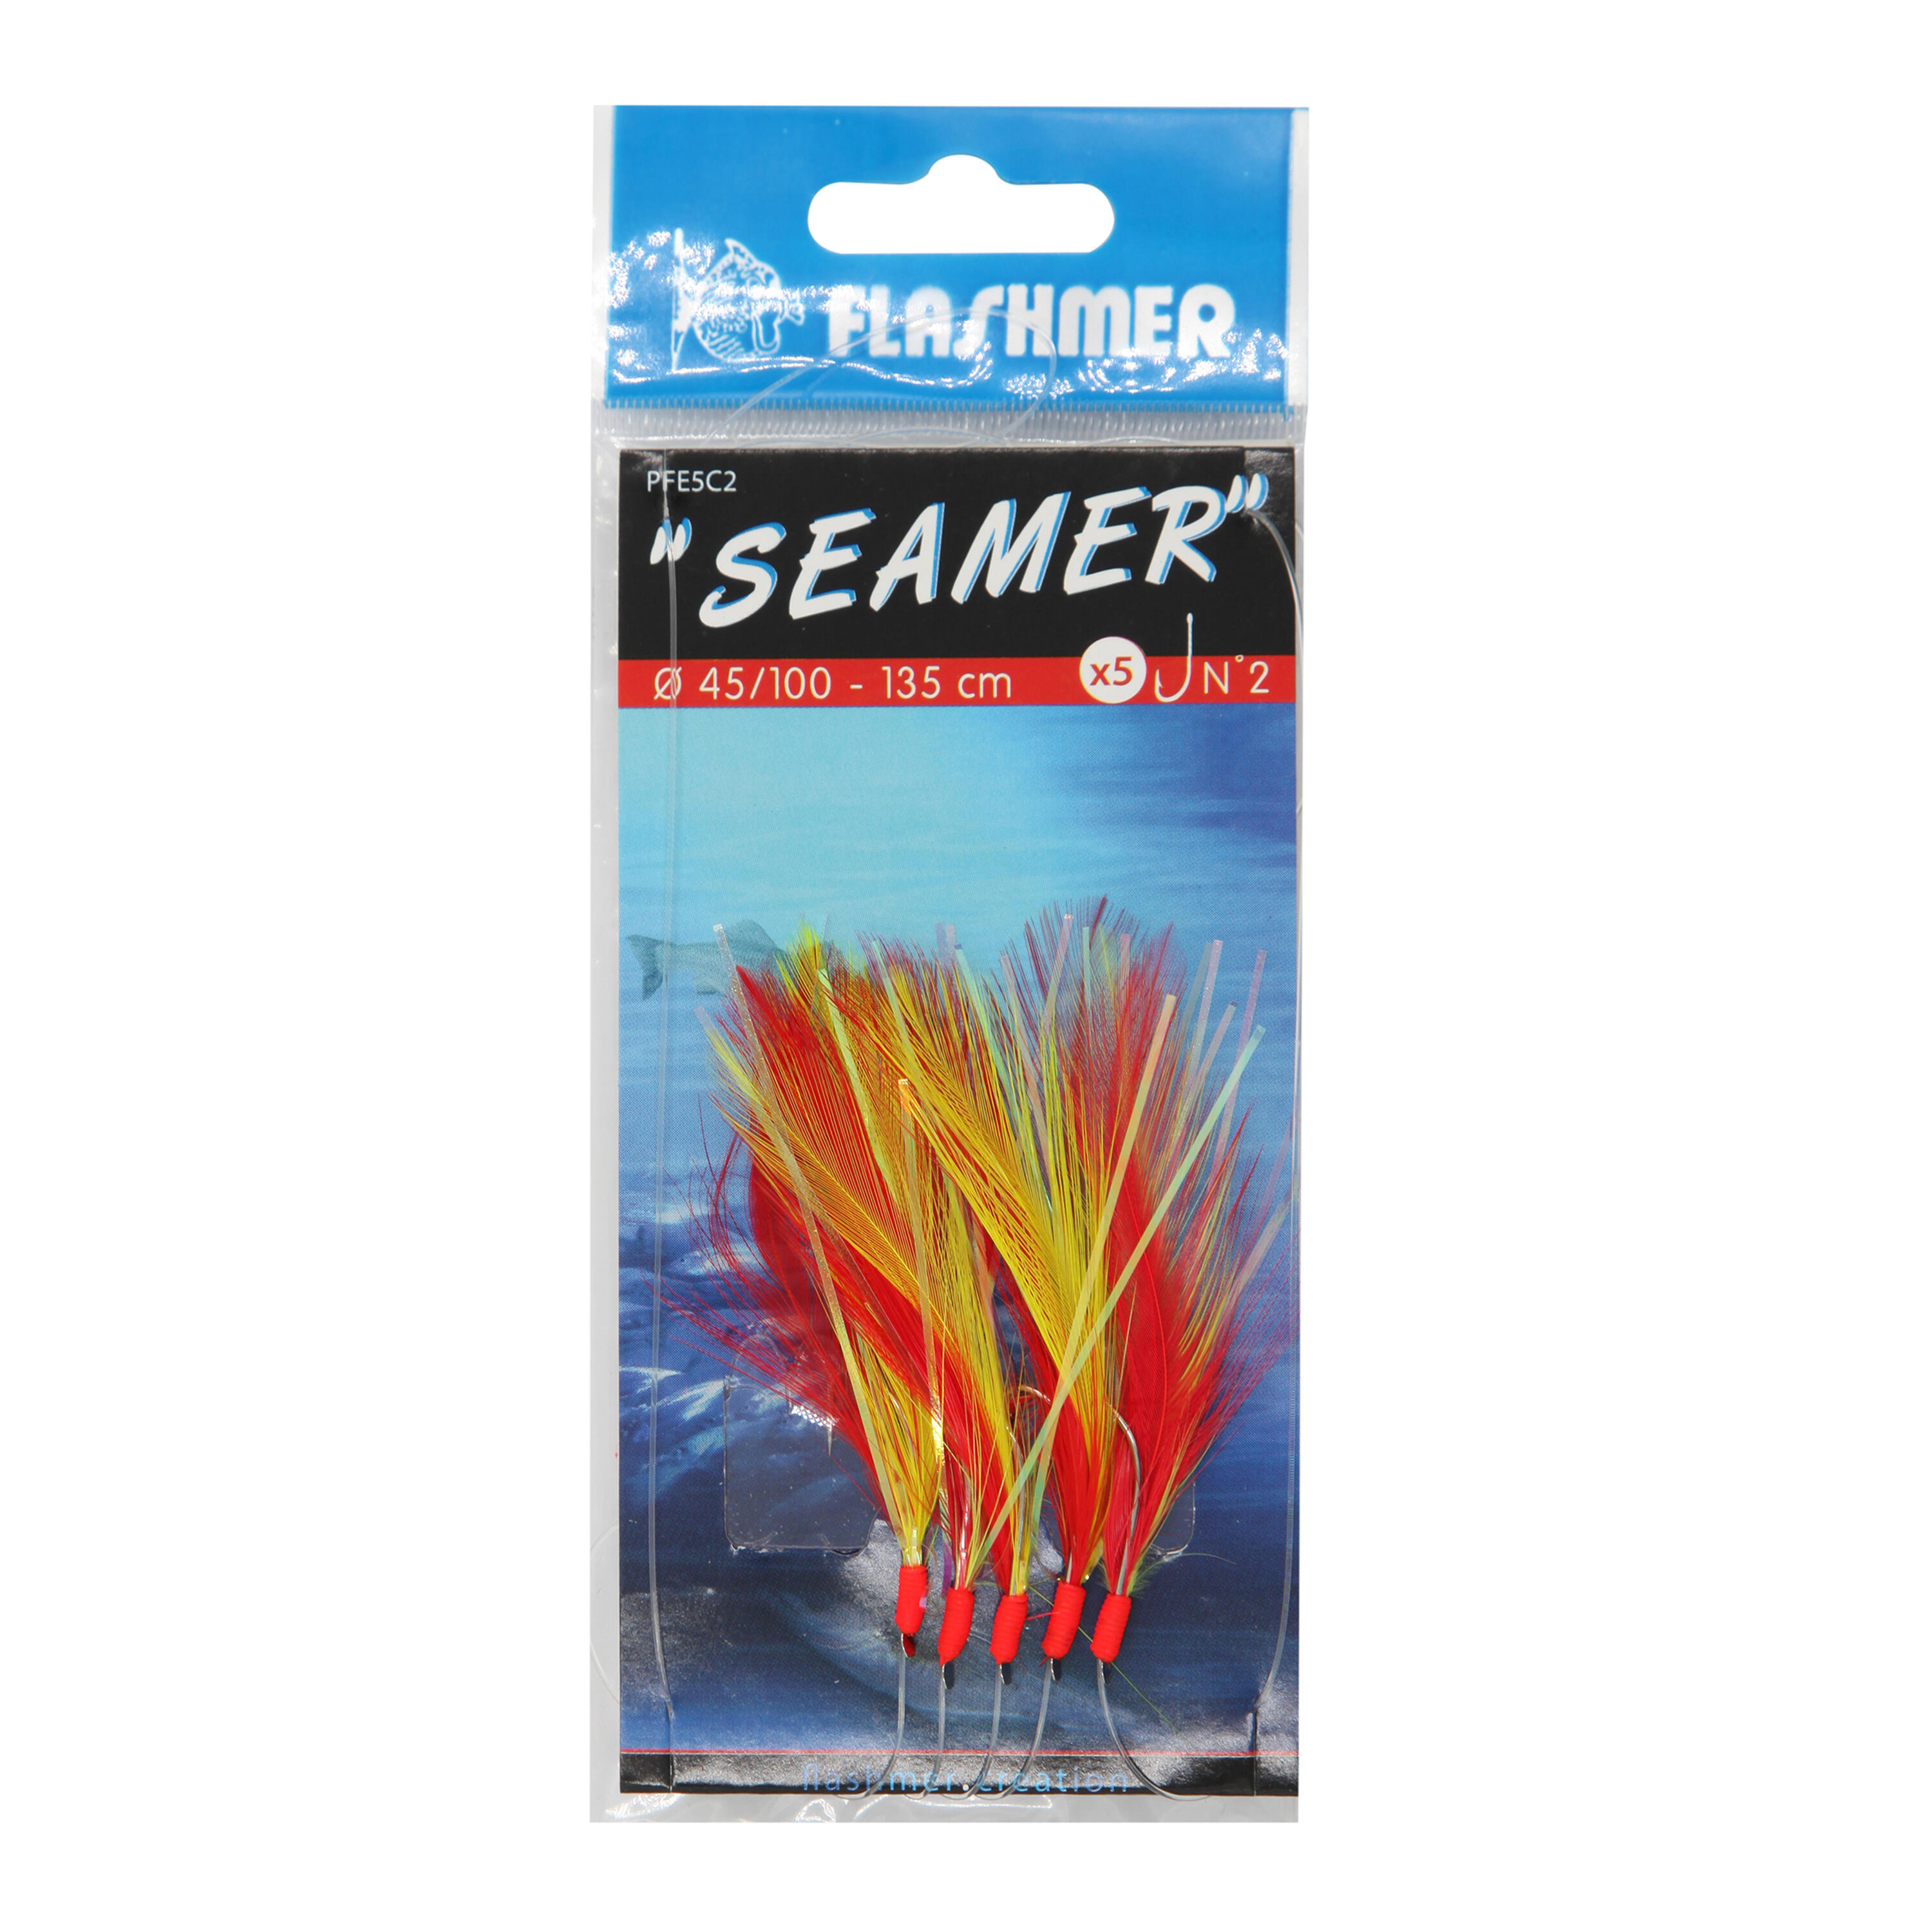 FLASHMER Seamer 5 N°1/0 hooks sea fishing leader